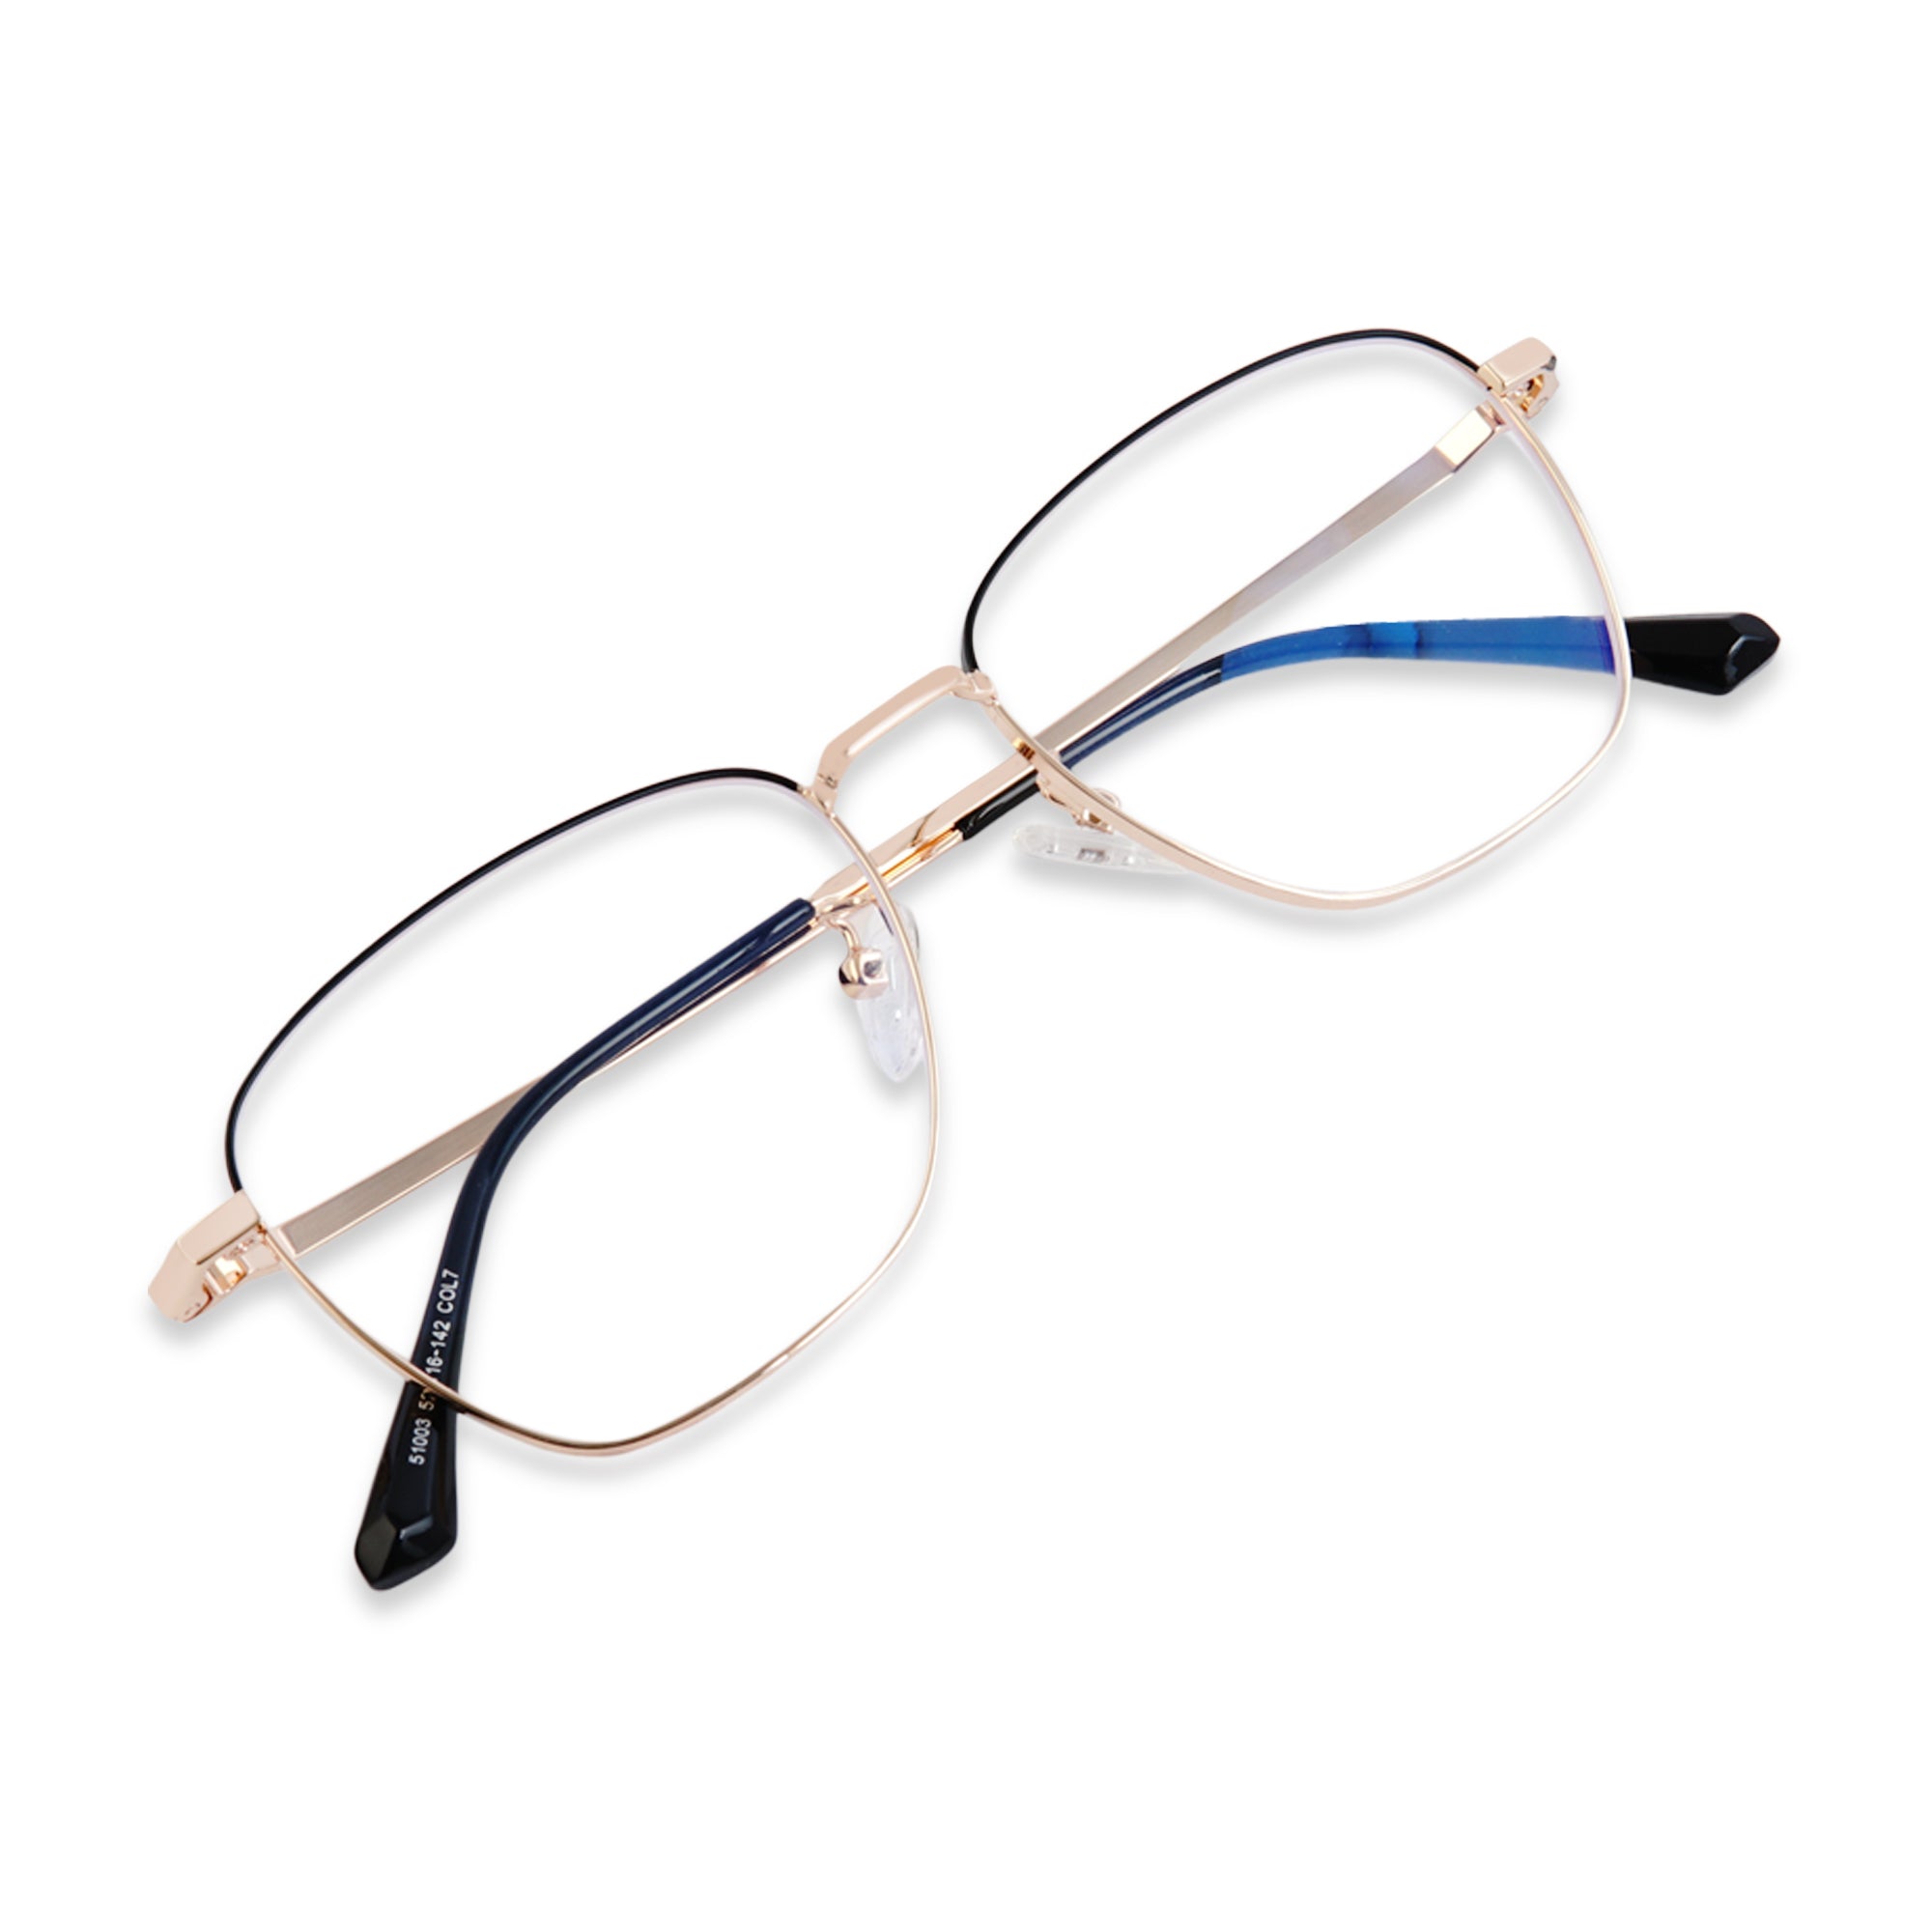 Black & Gold Square Metal Eyeglasses - L51003